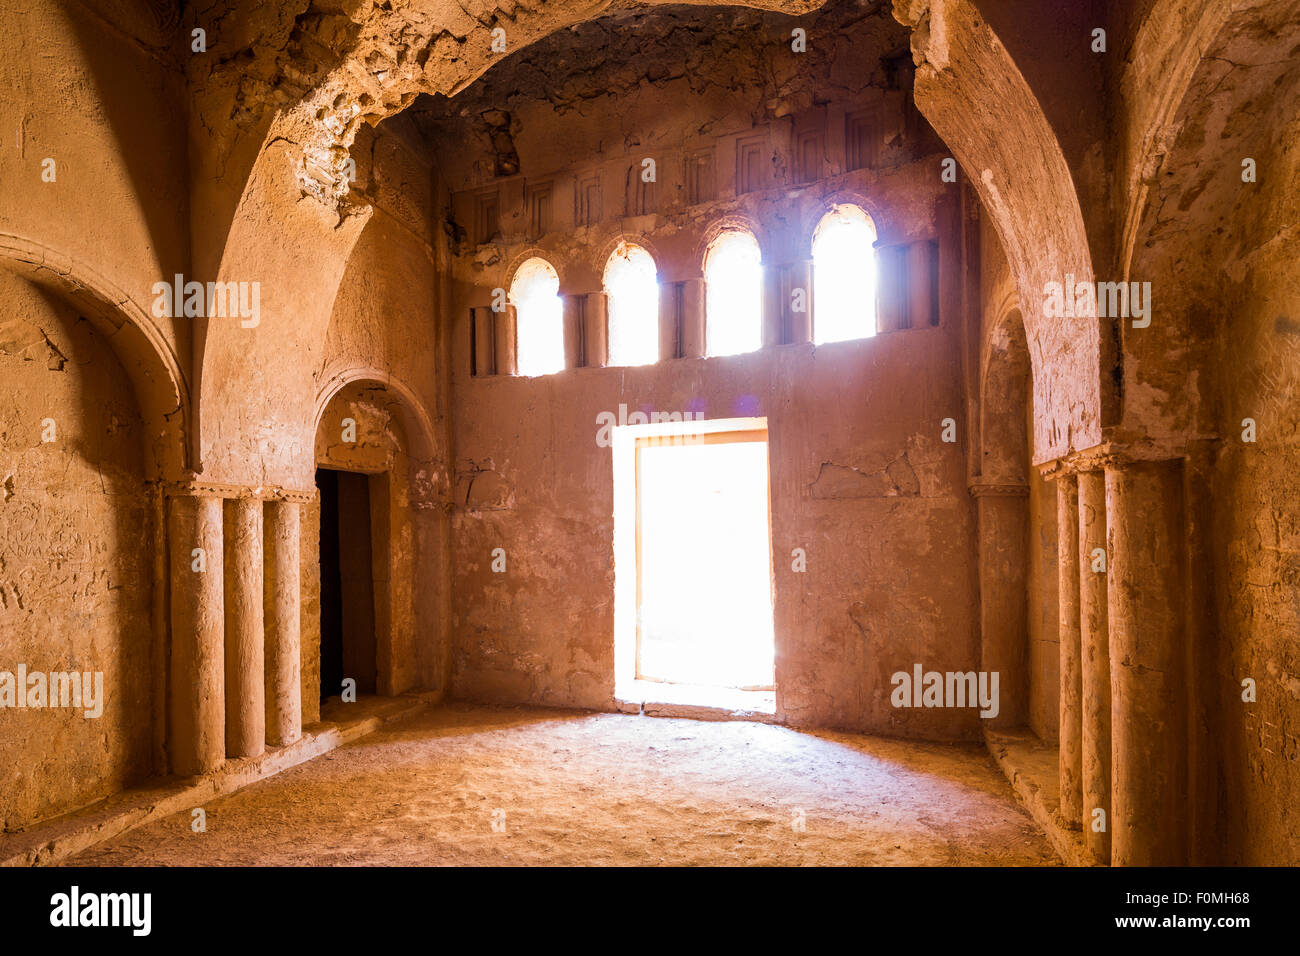 vaulted room, the early Islamic site of Qasr Kharana, Jordan Stock Photo